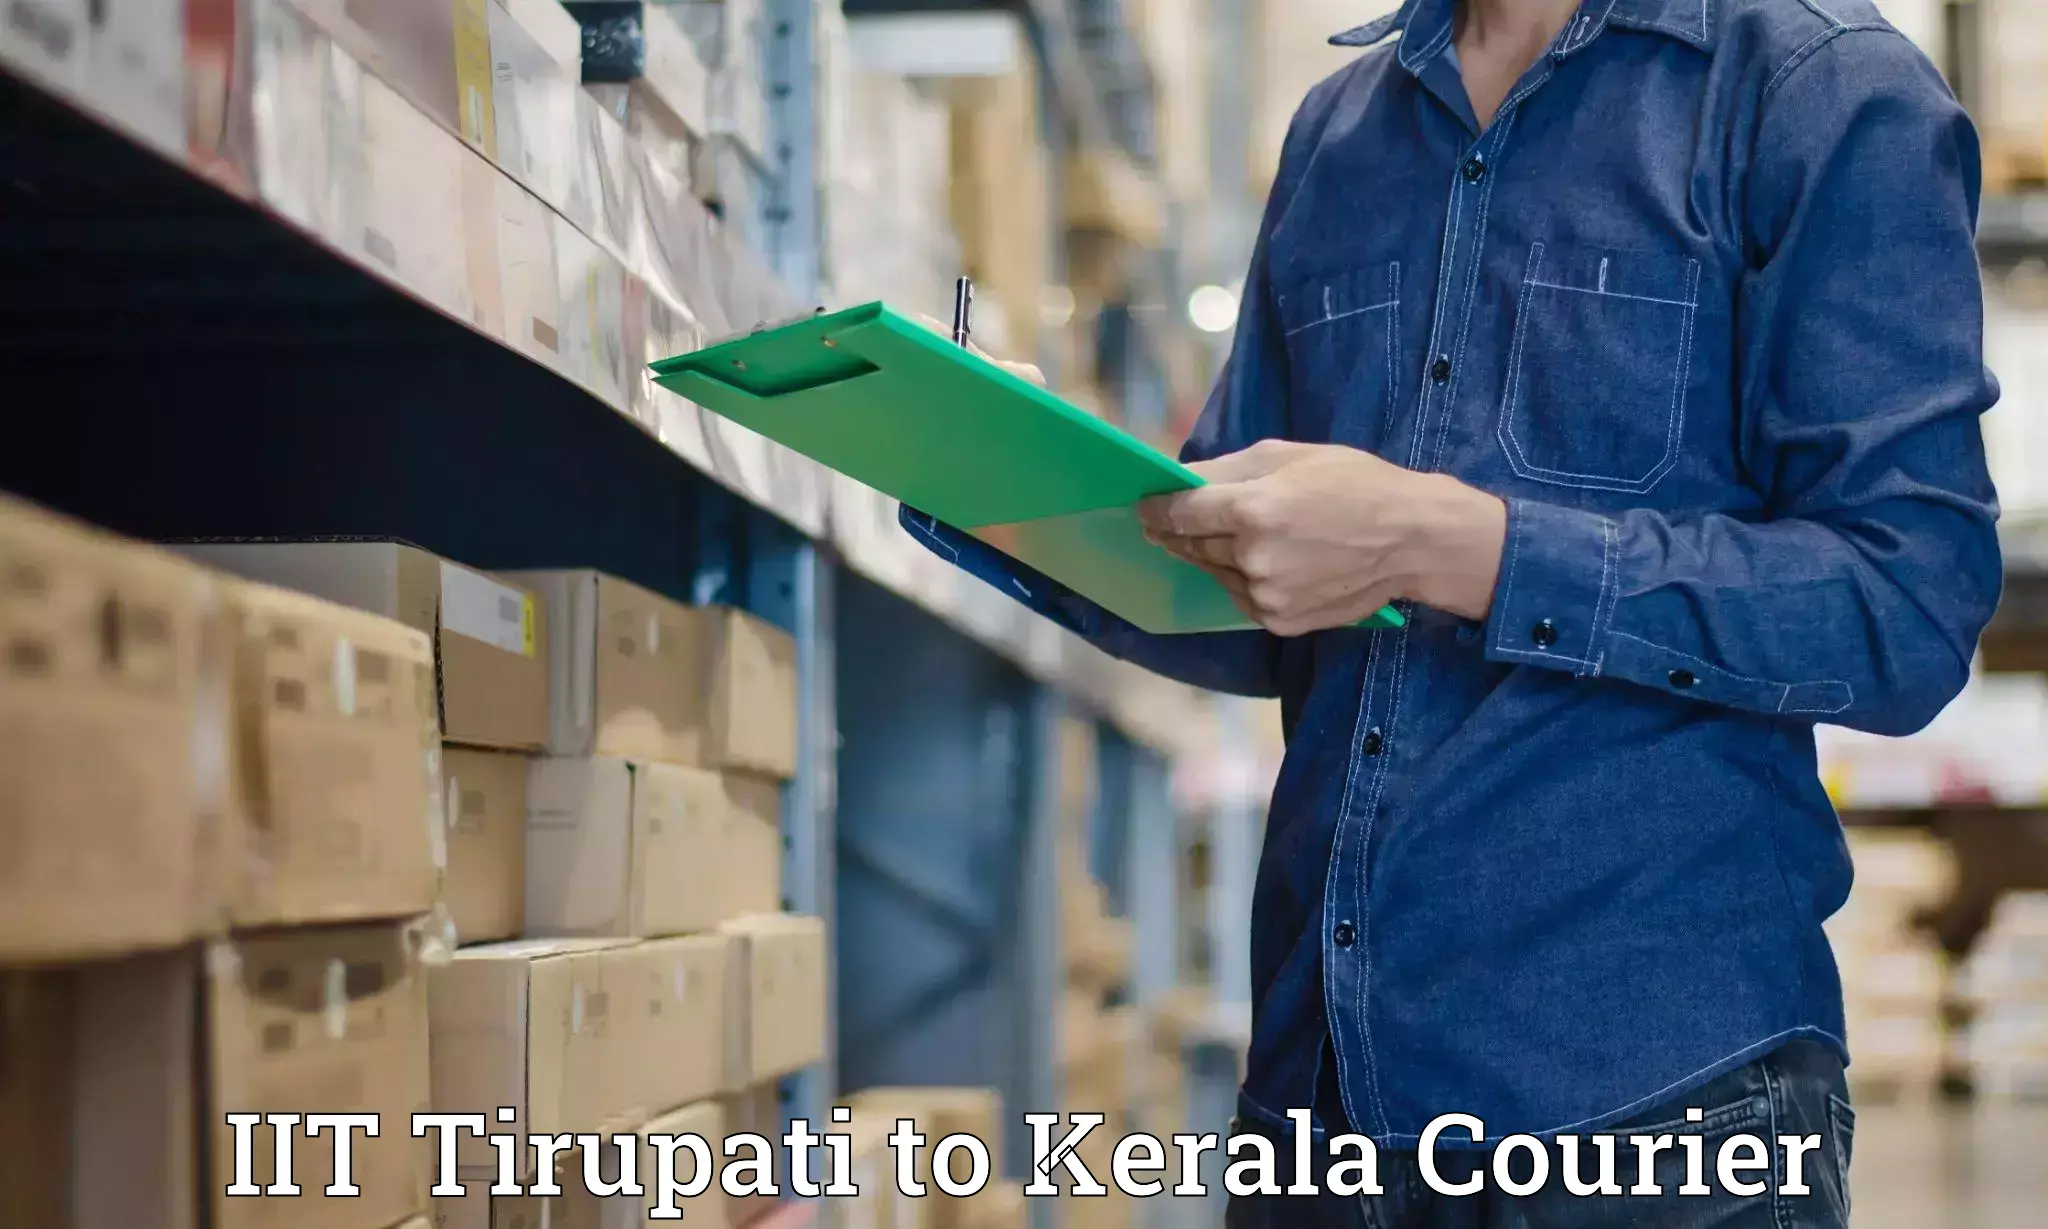 Speedy delivery service in IIT Tirupati to Kerala